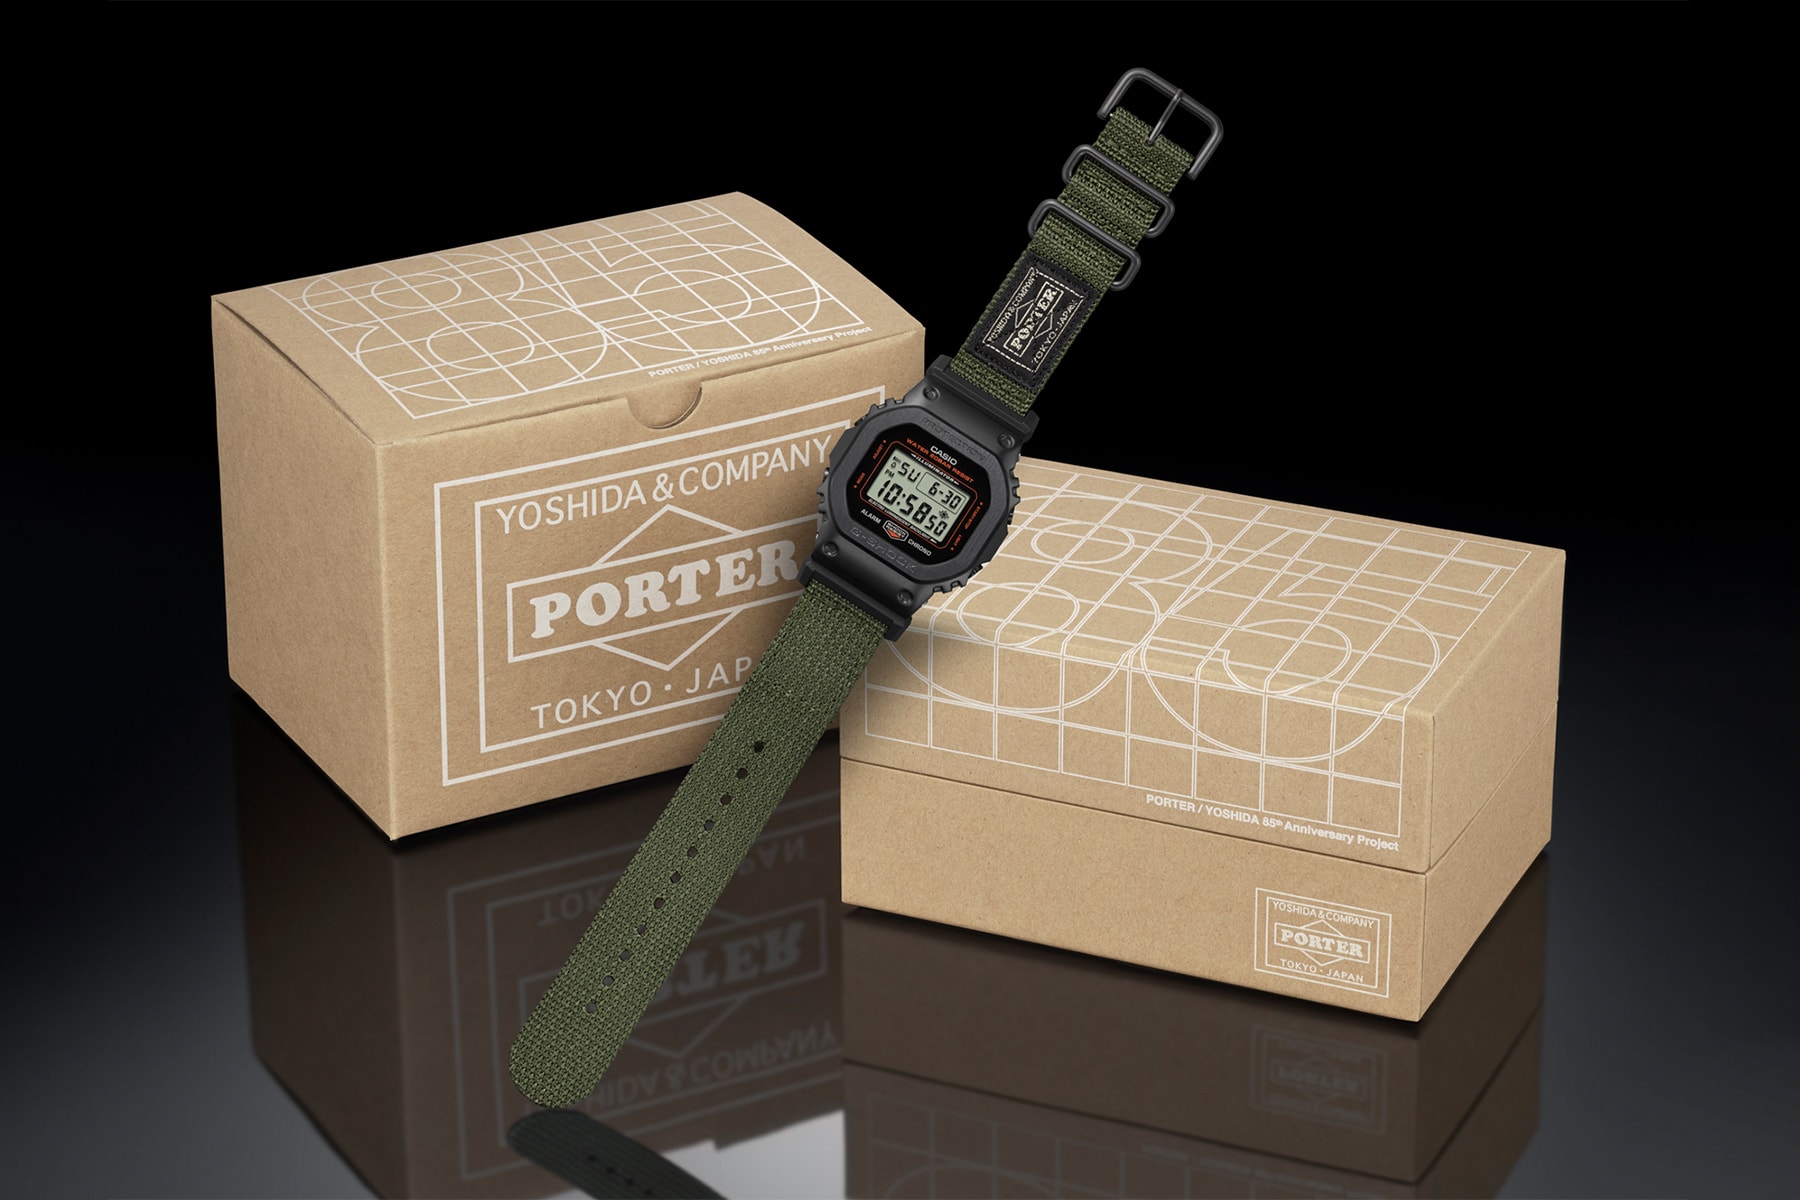 G-Shock x PORTER 全新聯乘 GM-5600EY 腕錶發佈